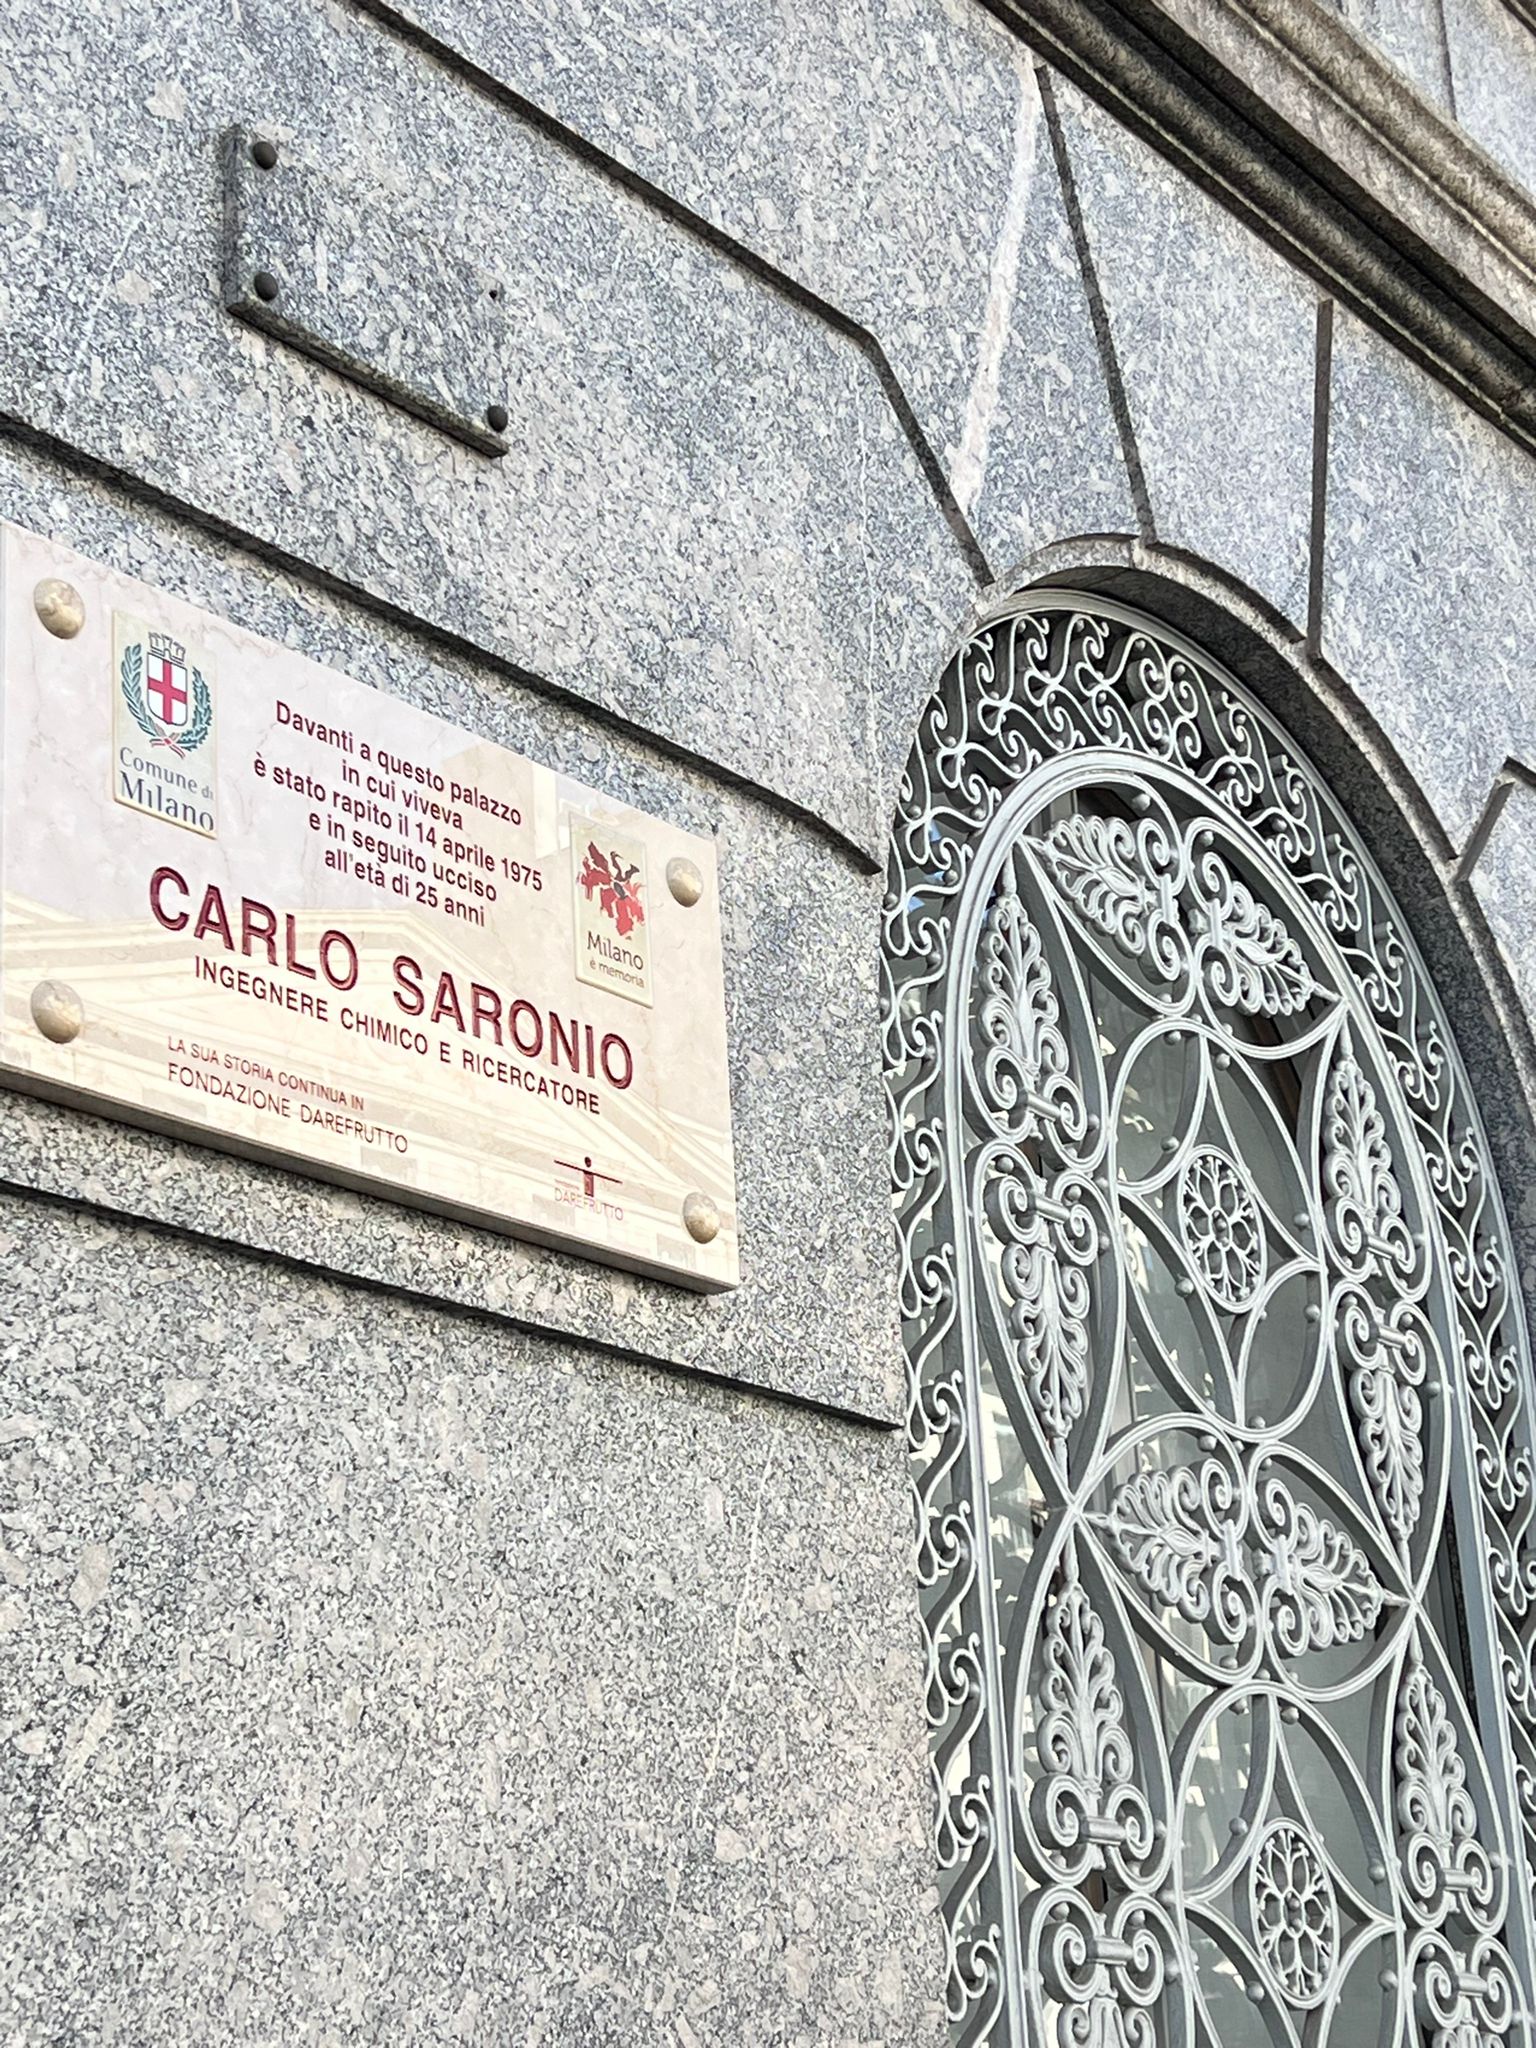 Milano ricorda Carlo Saronio